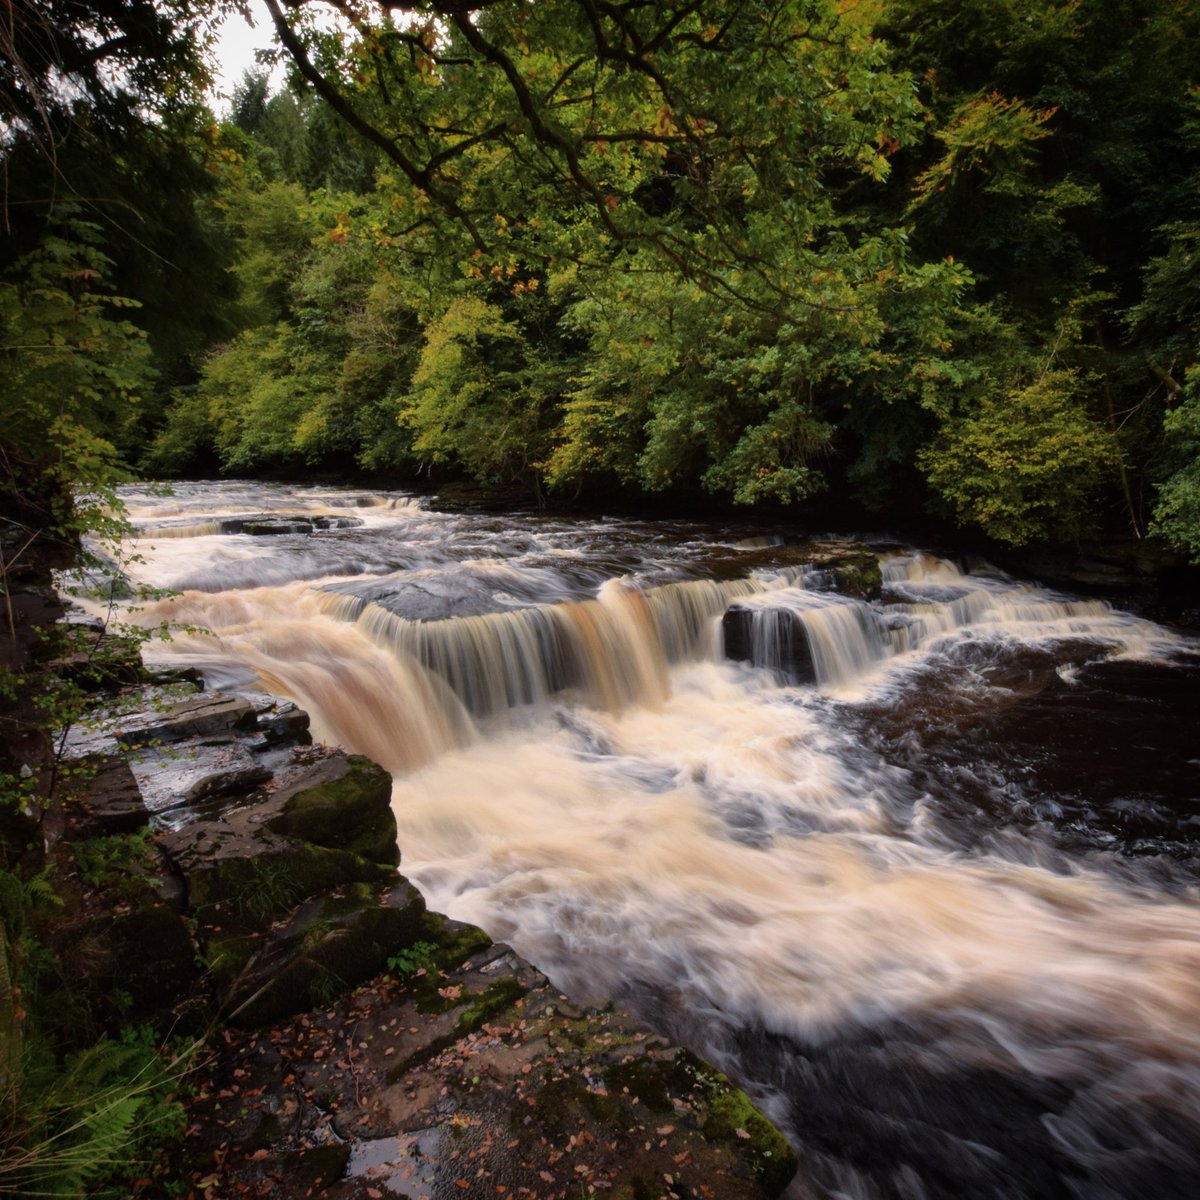 Plenty water coming over Dundaff Linn earlier. @VisitScotland @VsitLanarkshire @newlanarkwhs @welovehistory @TheFallsOfClyde #newlanark #lanarkshire #scotspirit #ScotlandisNow #Scotland #dundafflinn #waterfall